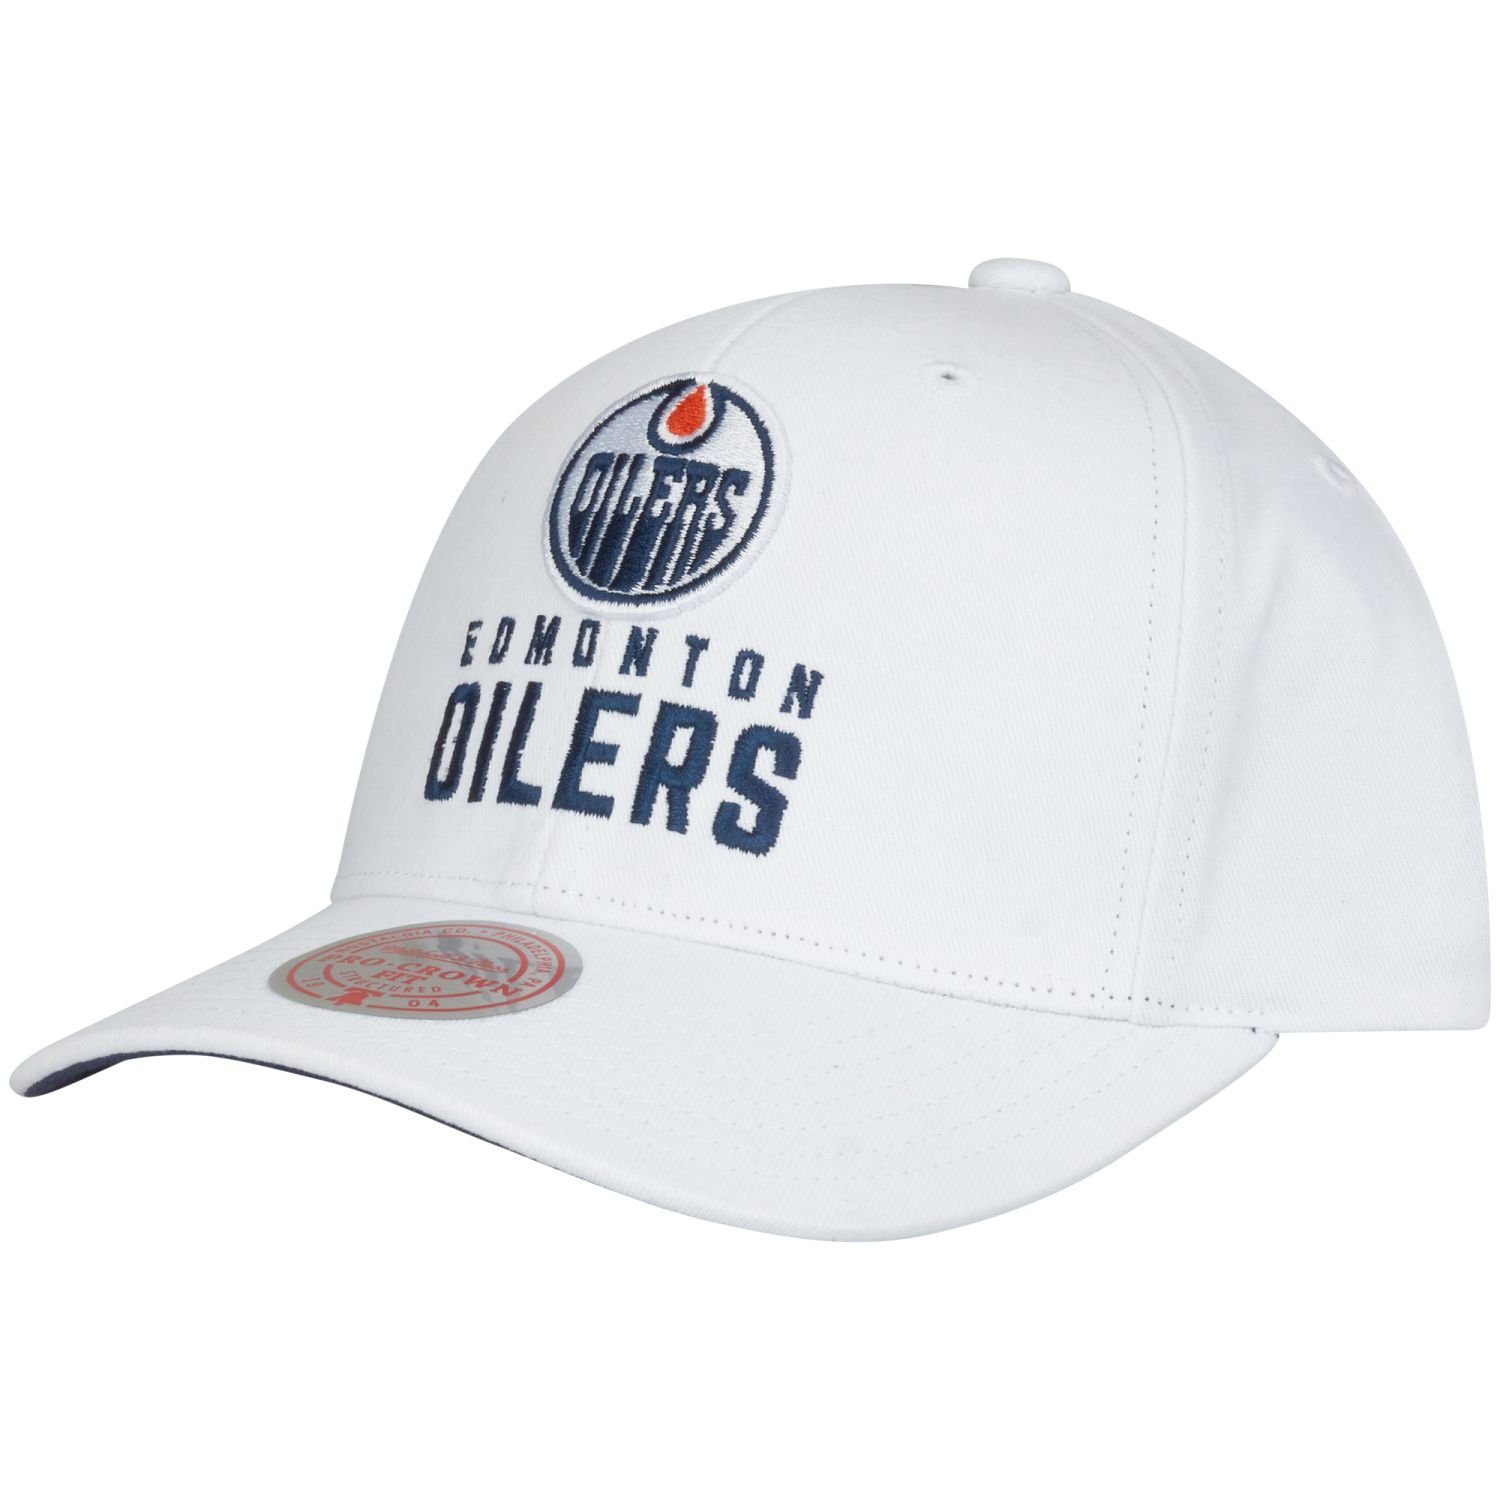 Cap Edmonton IN Snapback & Oilers Ness Mitchell ALL PRO